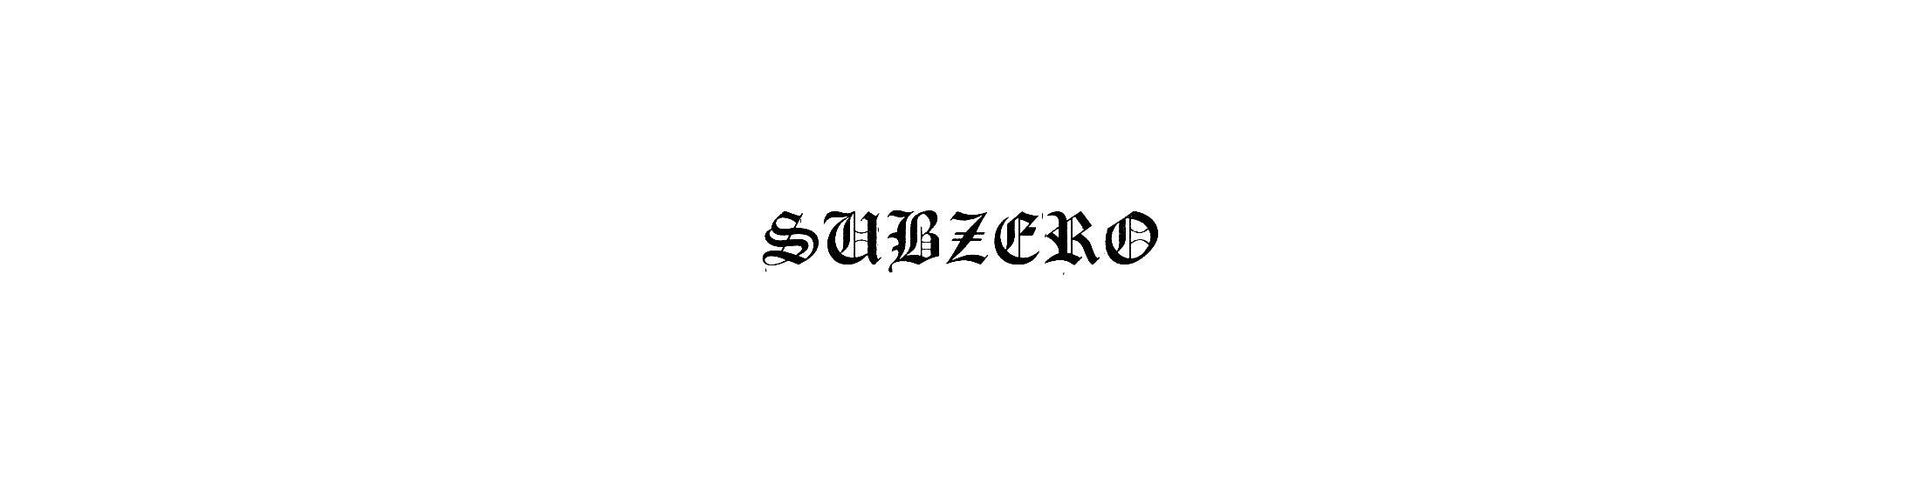 Shop – Subzero – Band & Music Merch – Cold Cuts Merch